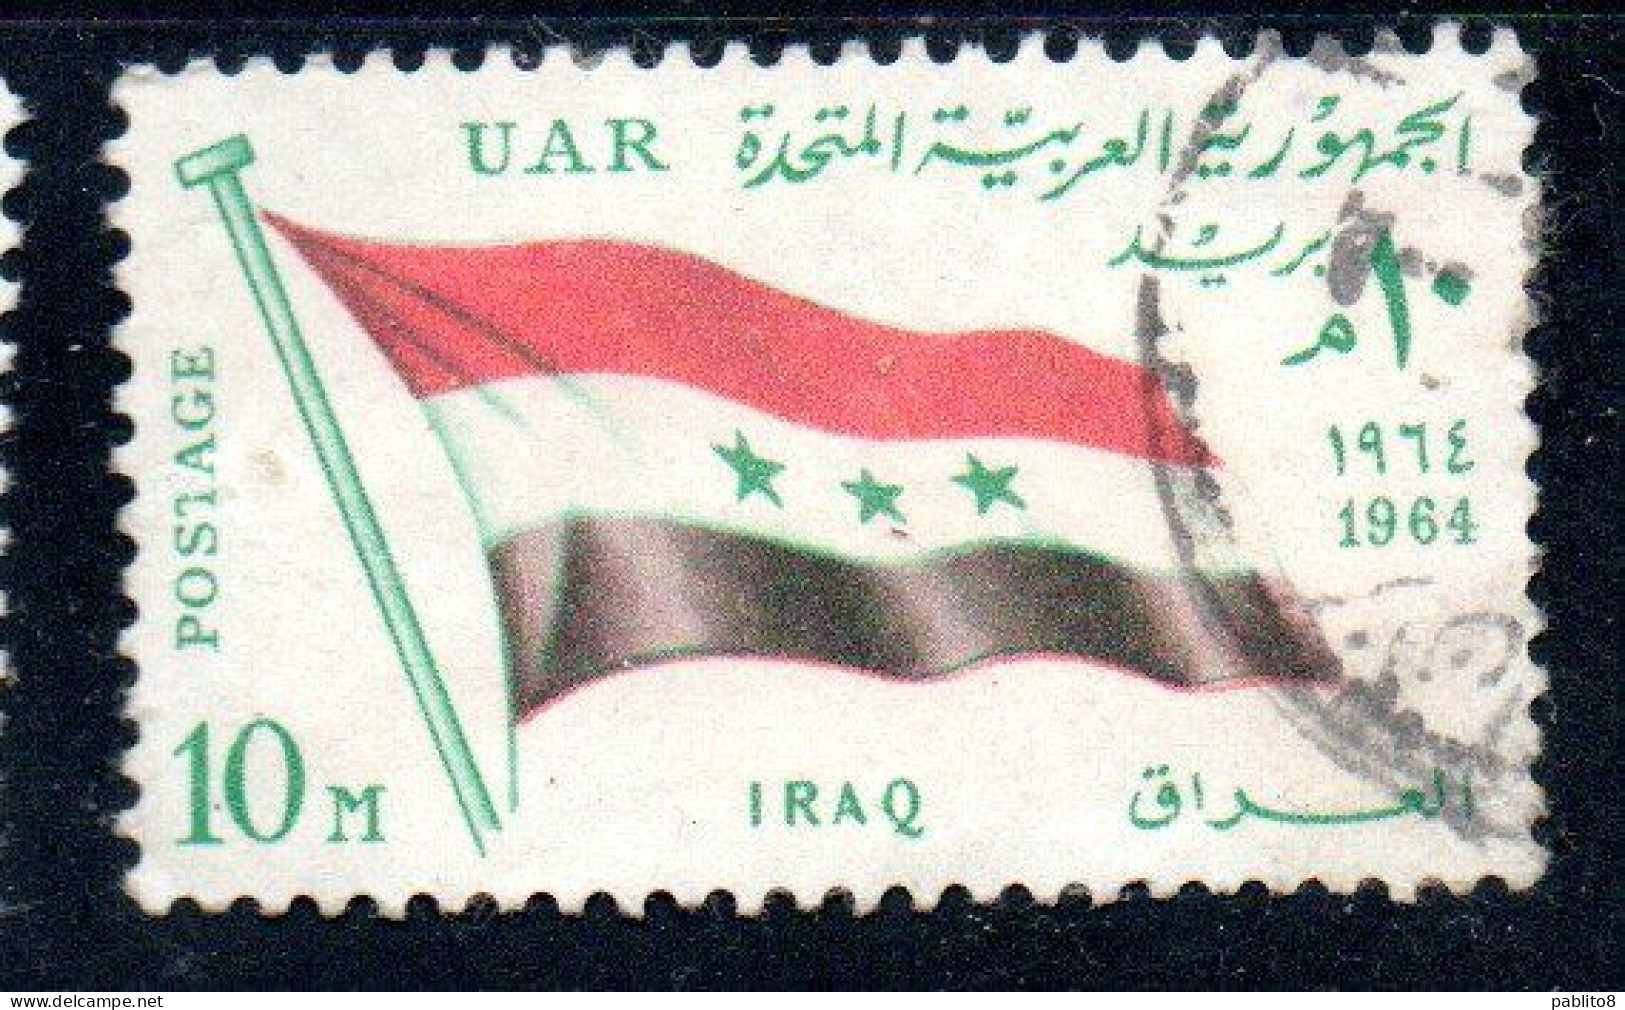 UAR EGYPT EGITTO 1964 SECOND MEETING OF HEADS STATE ARAB LEAGUE FLAG OF IRAQ 10m USED USATO OBLITERE' - Gebruikt